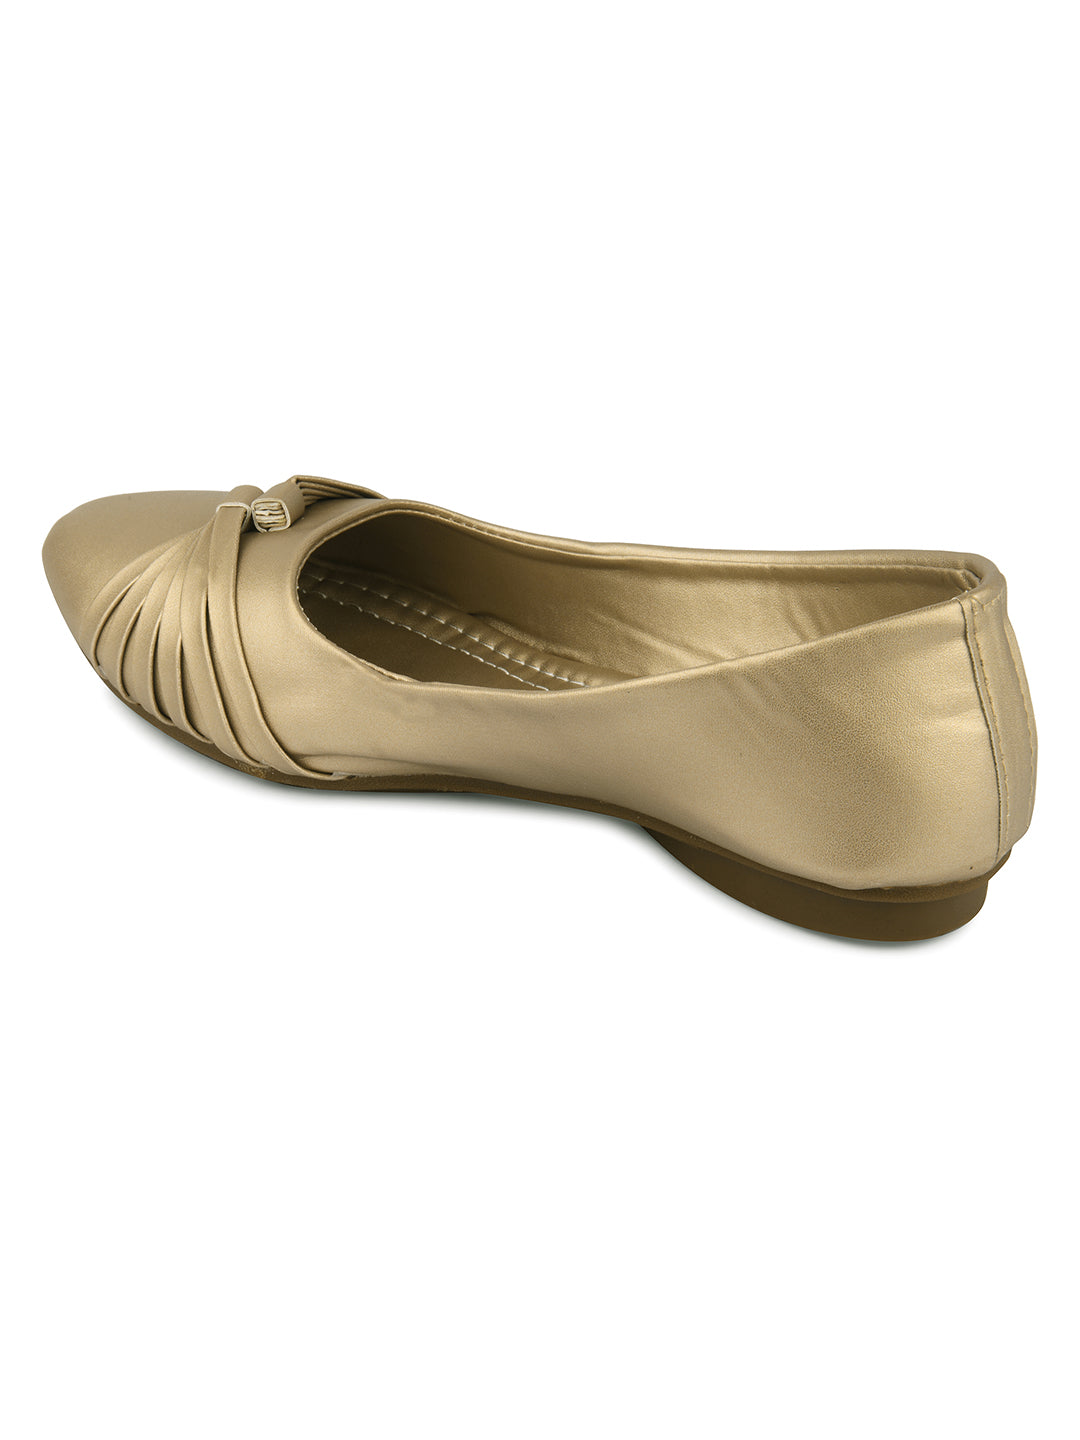 DESI COLOUR Women Gold-Toned Ballerinas with Bows Flats